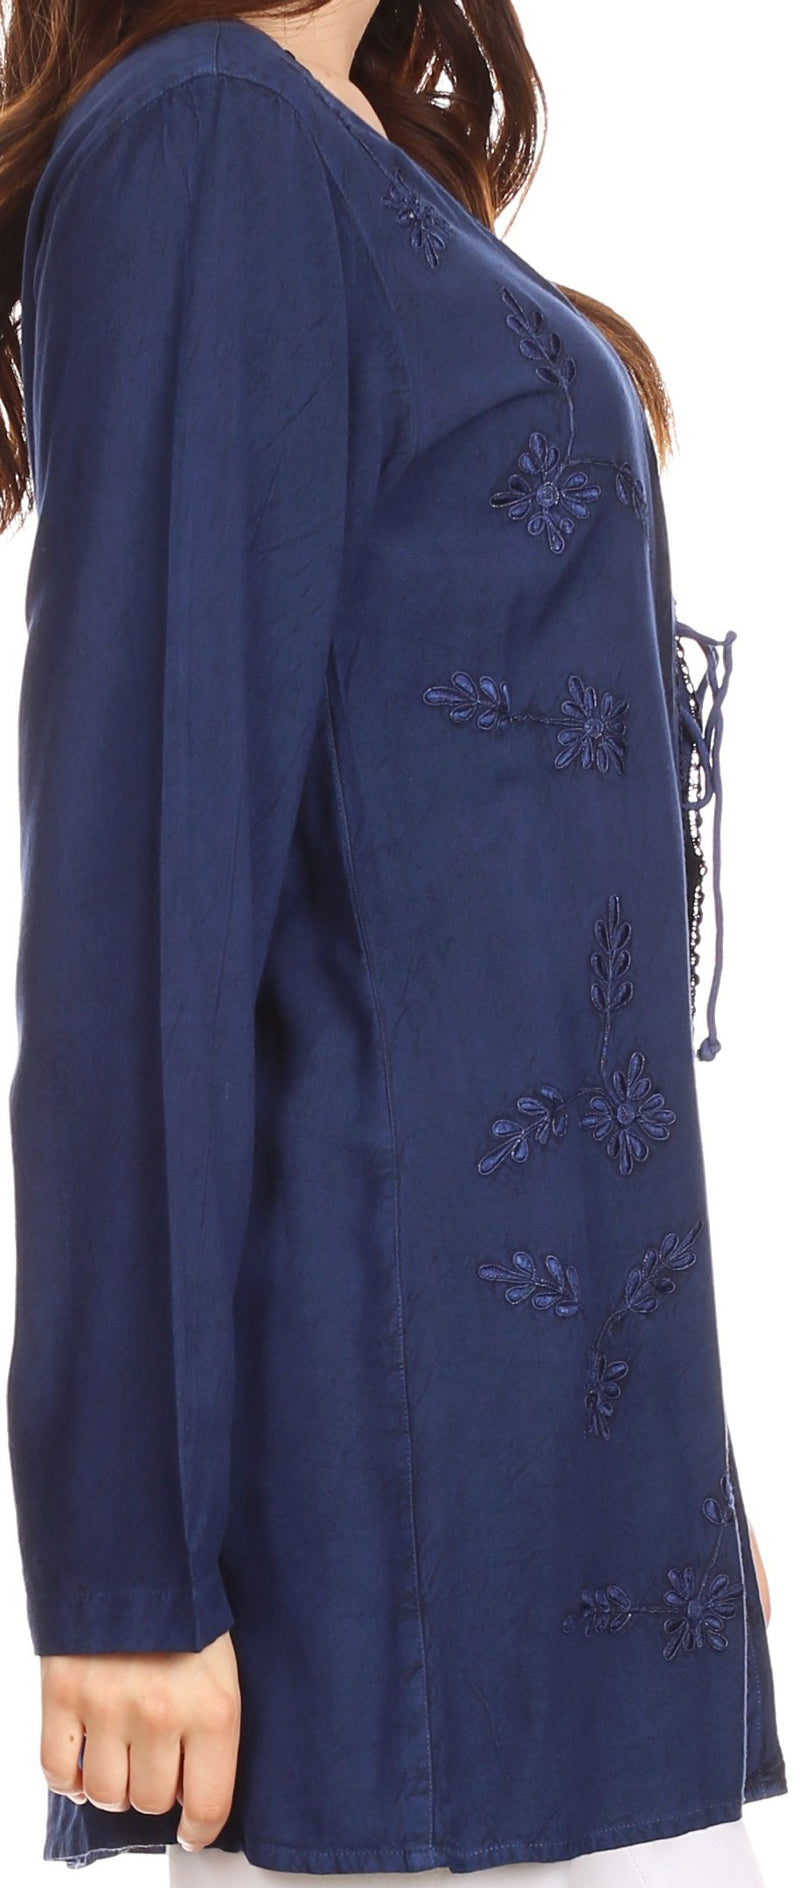 Sakkas Caylyan Long Adjustable Embroidered Long Sleeve Blouse With Corset Top